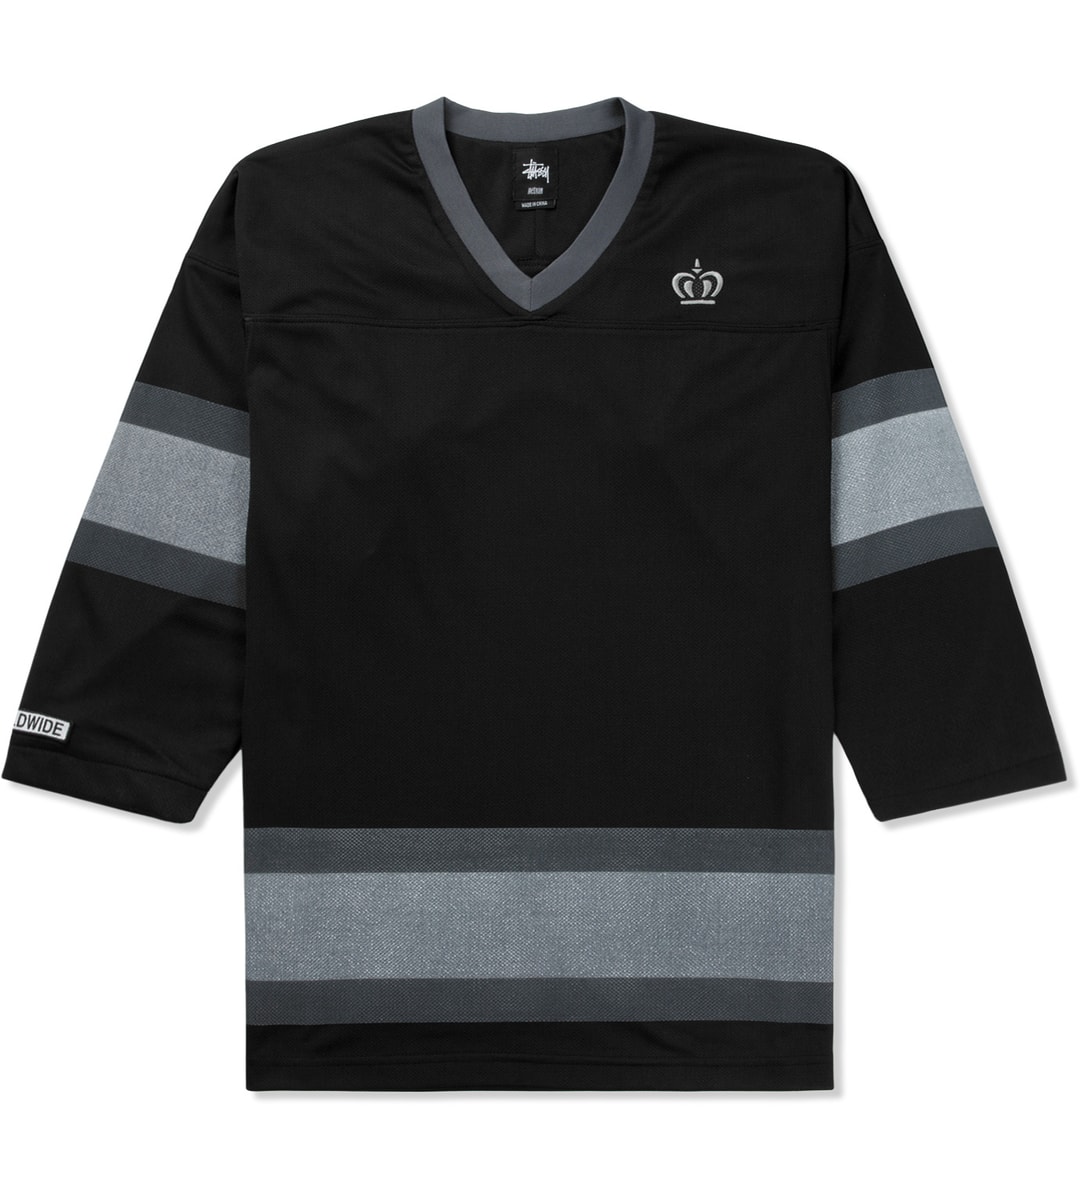 Urban Outfitters Slipknot Hockey Jersey in Black for Men